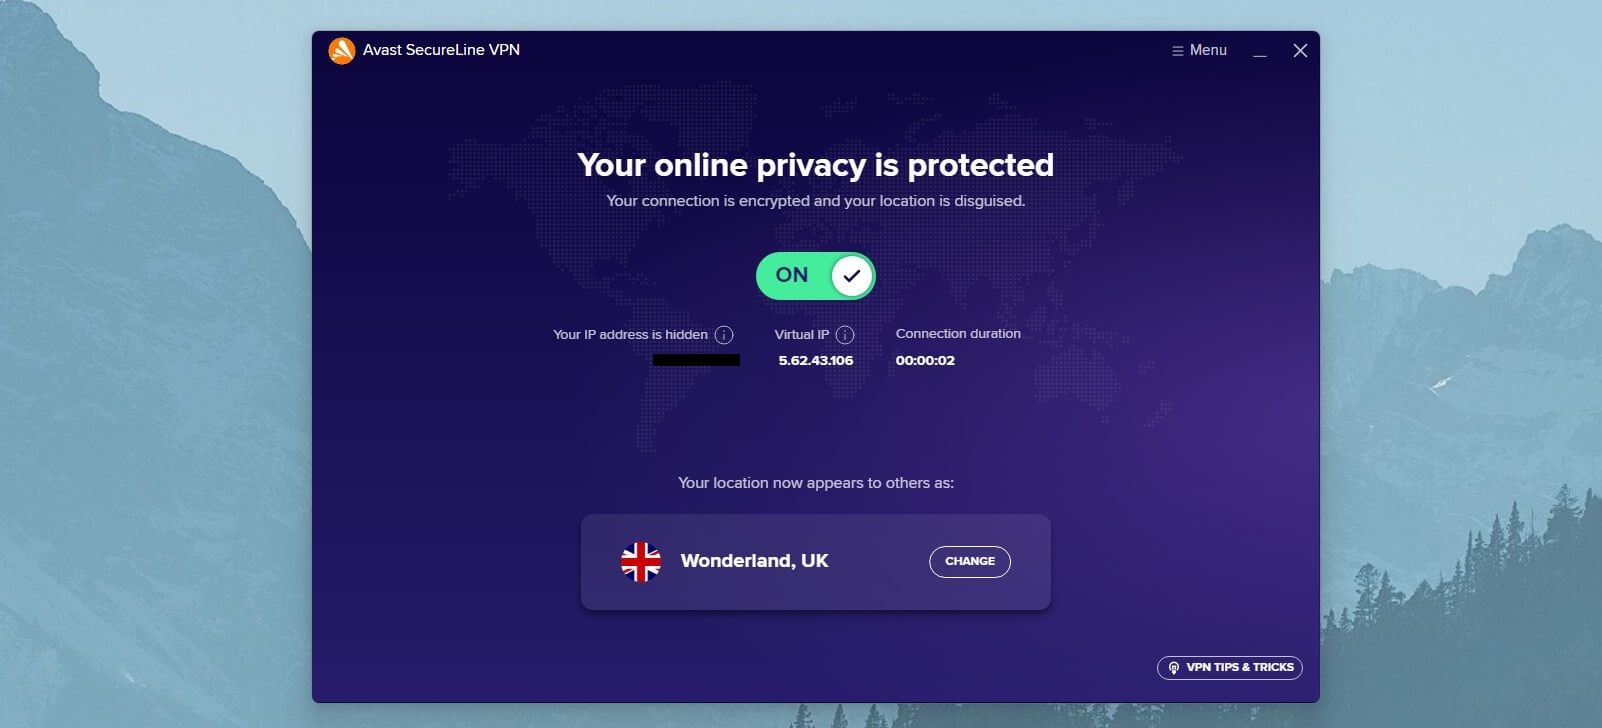 Avast SecureLine VPN App 2